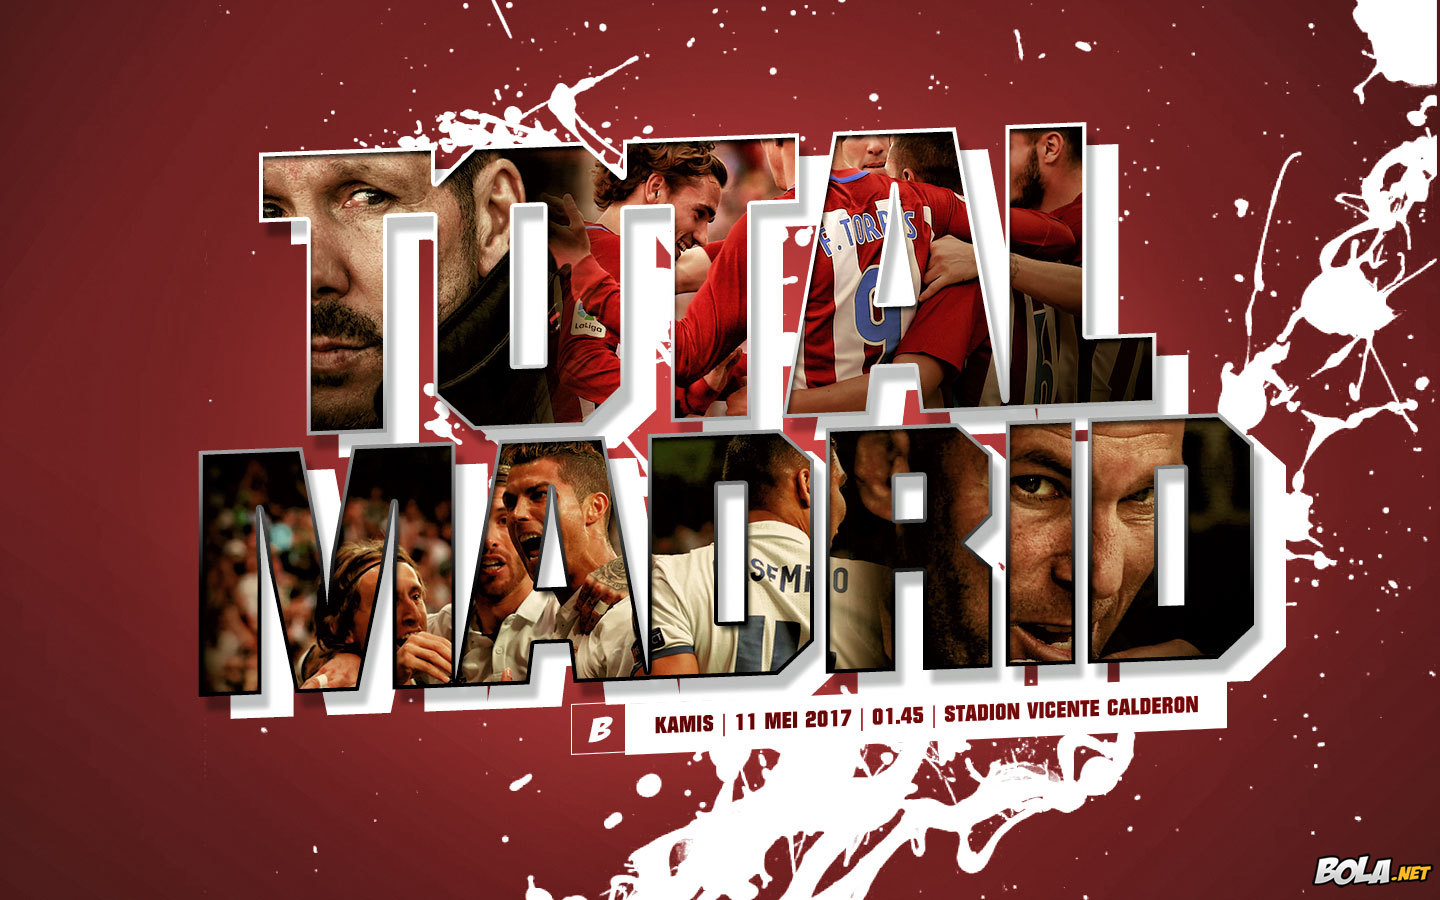 Deskripsi : Wallpaper Atletico Madrid Vs Real Madrid, size: 1440x900